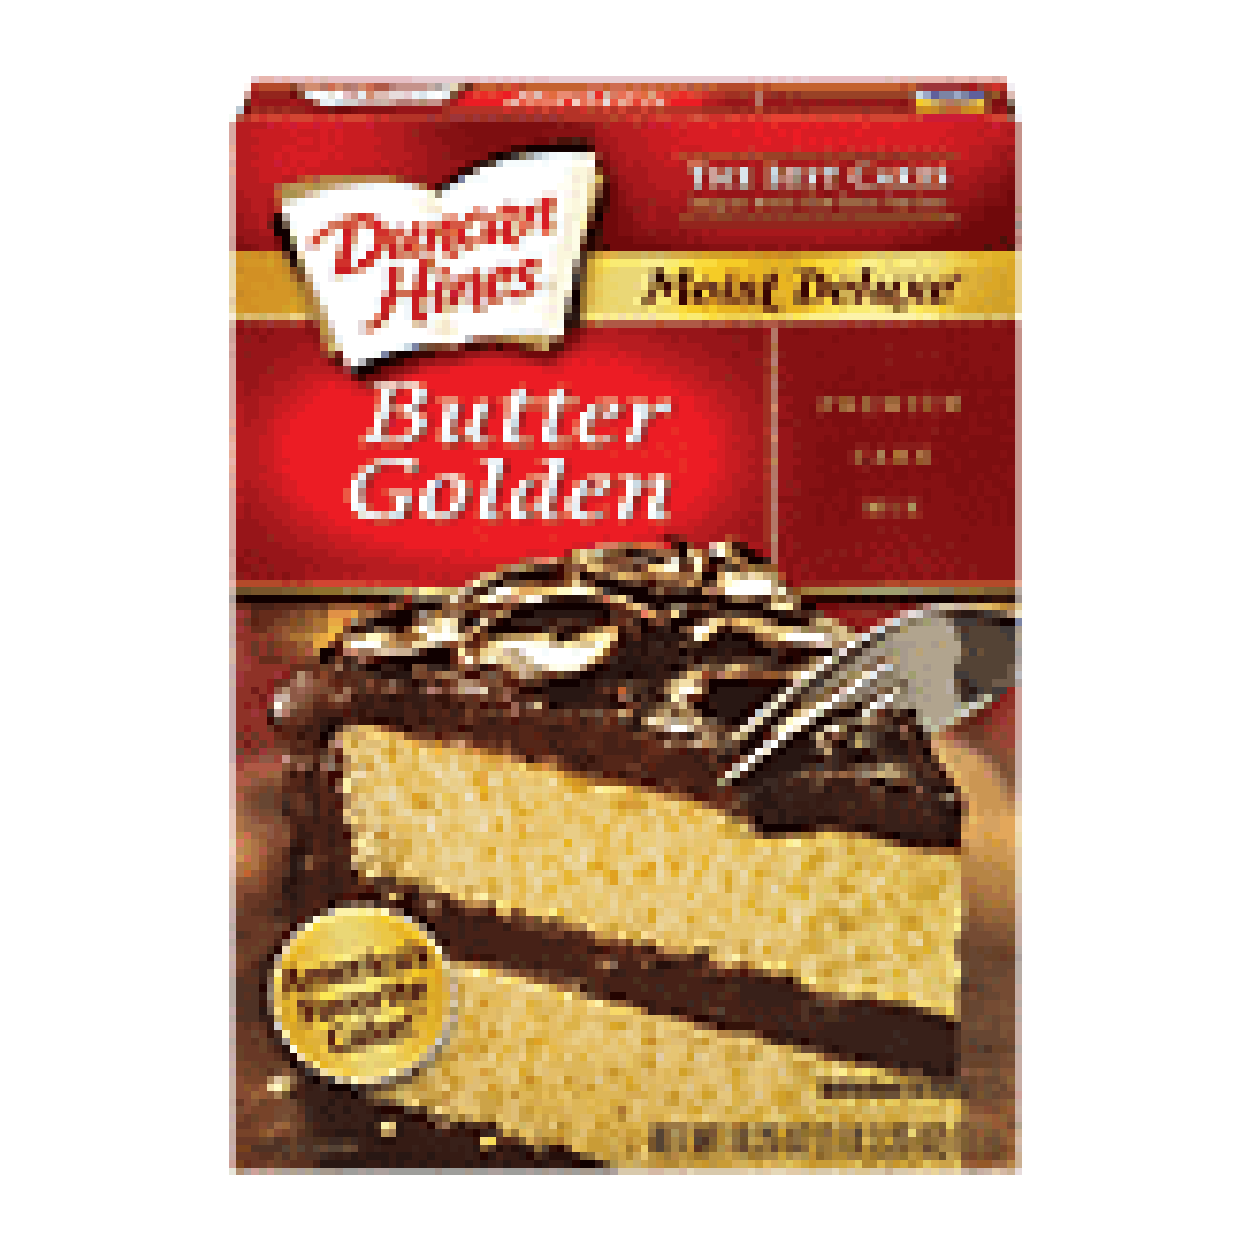 duncan hines butter golden cake mix instructions